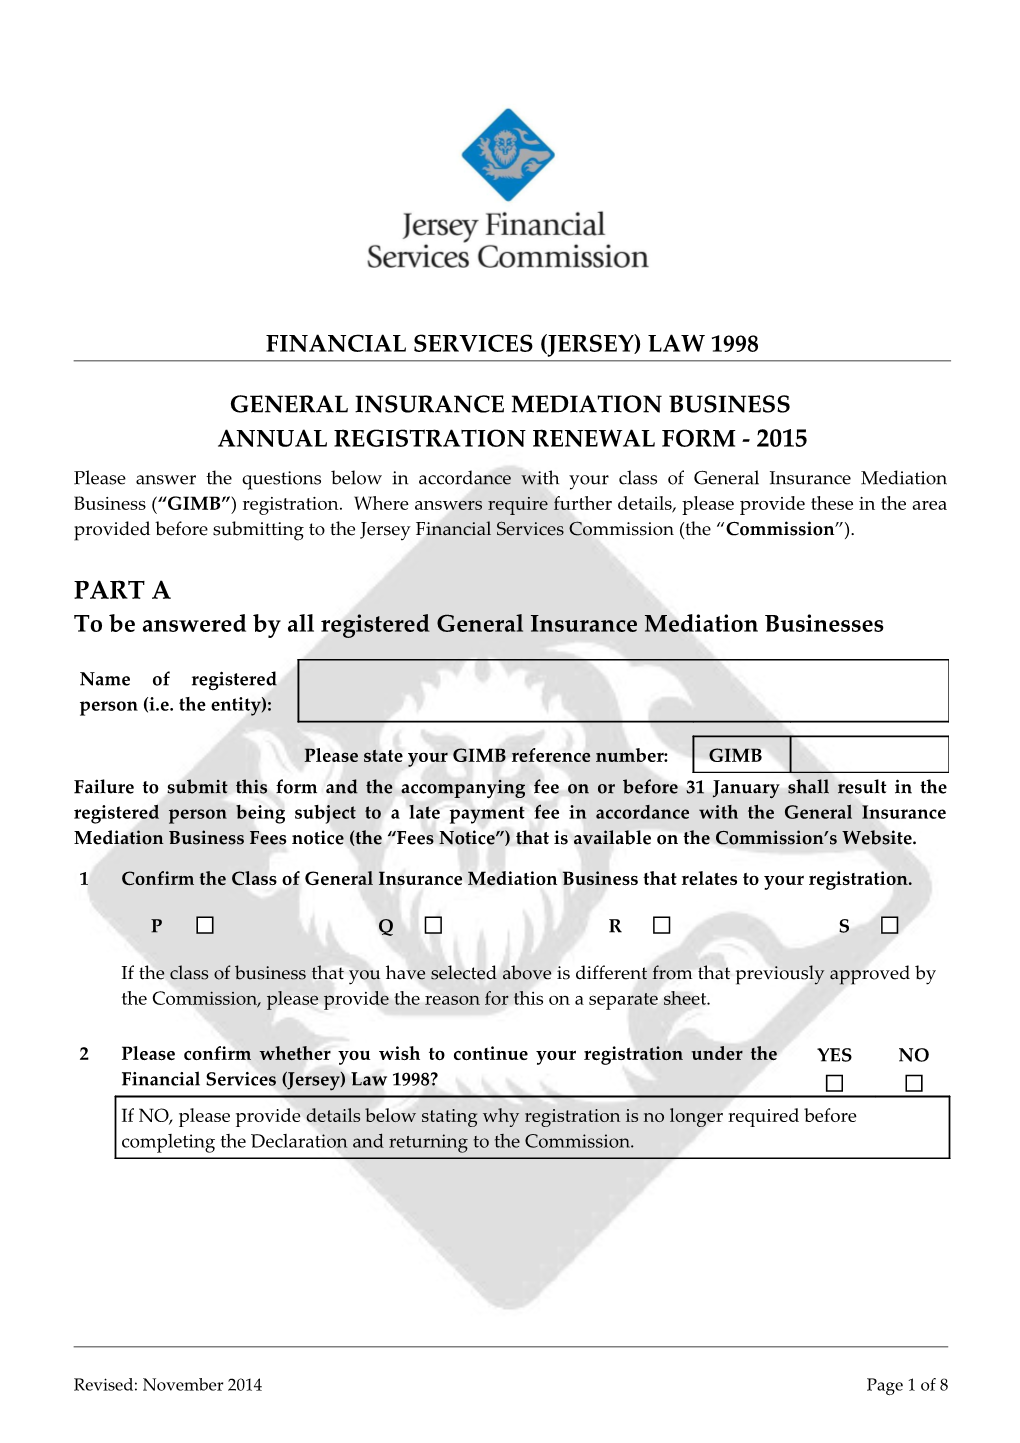 Annual Registration Renewal Form General Insurance Mediation Business